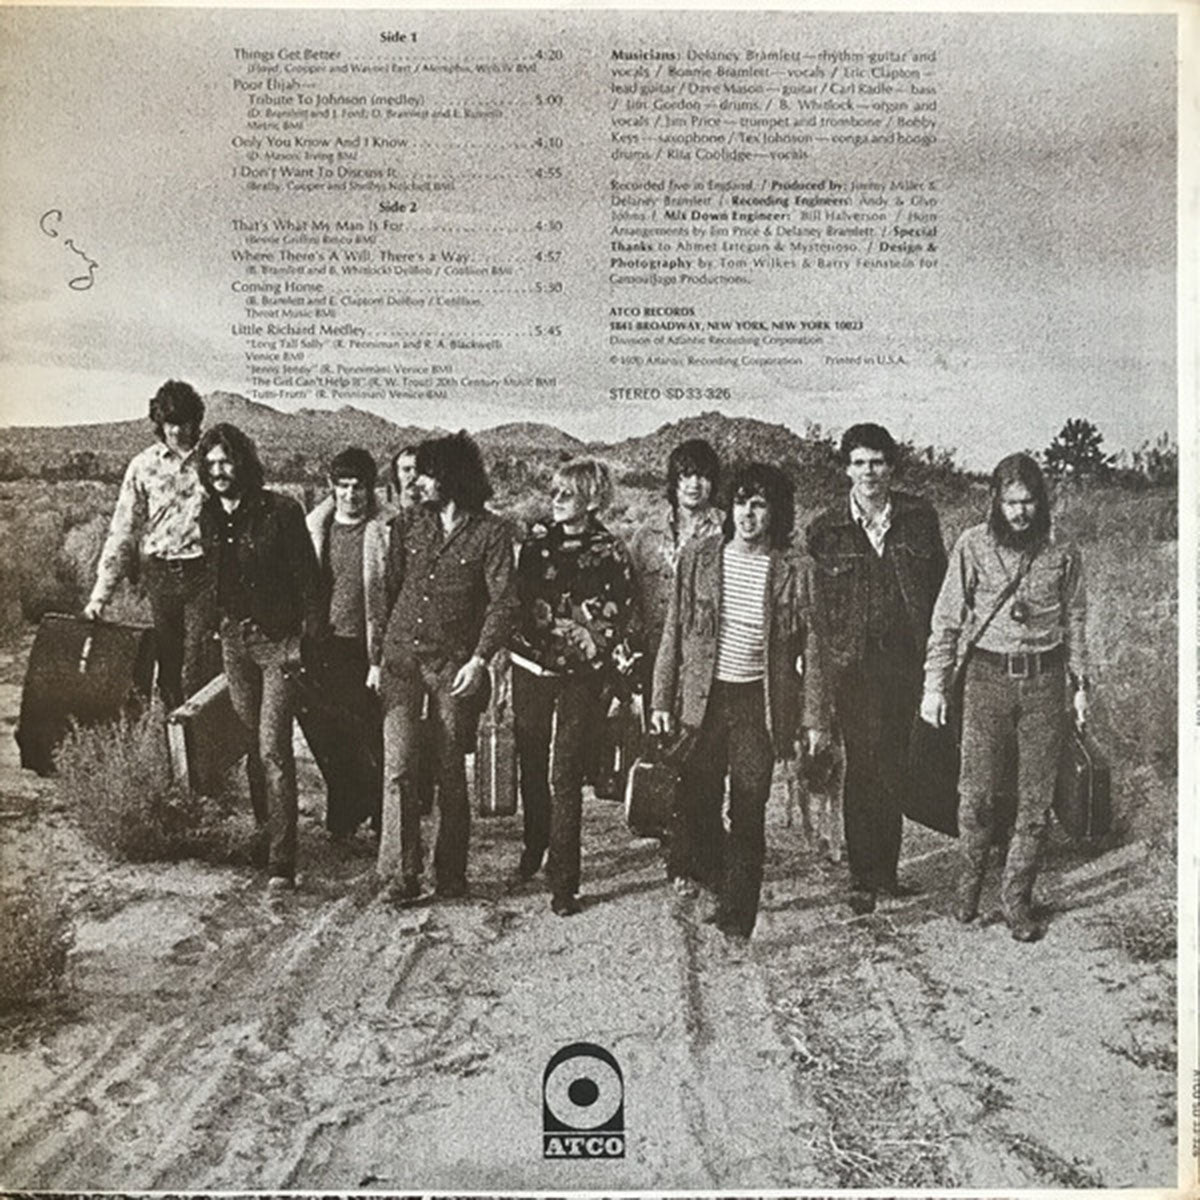 Delaney & Bonnie & Friends with Eric Clapton – On Tour - 1970 Pressing